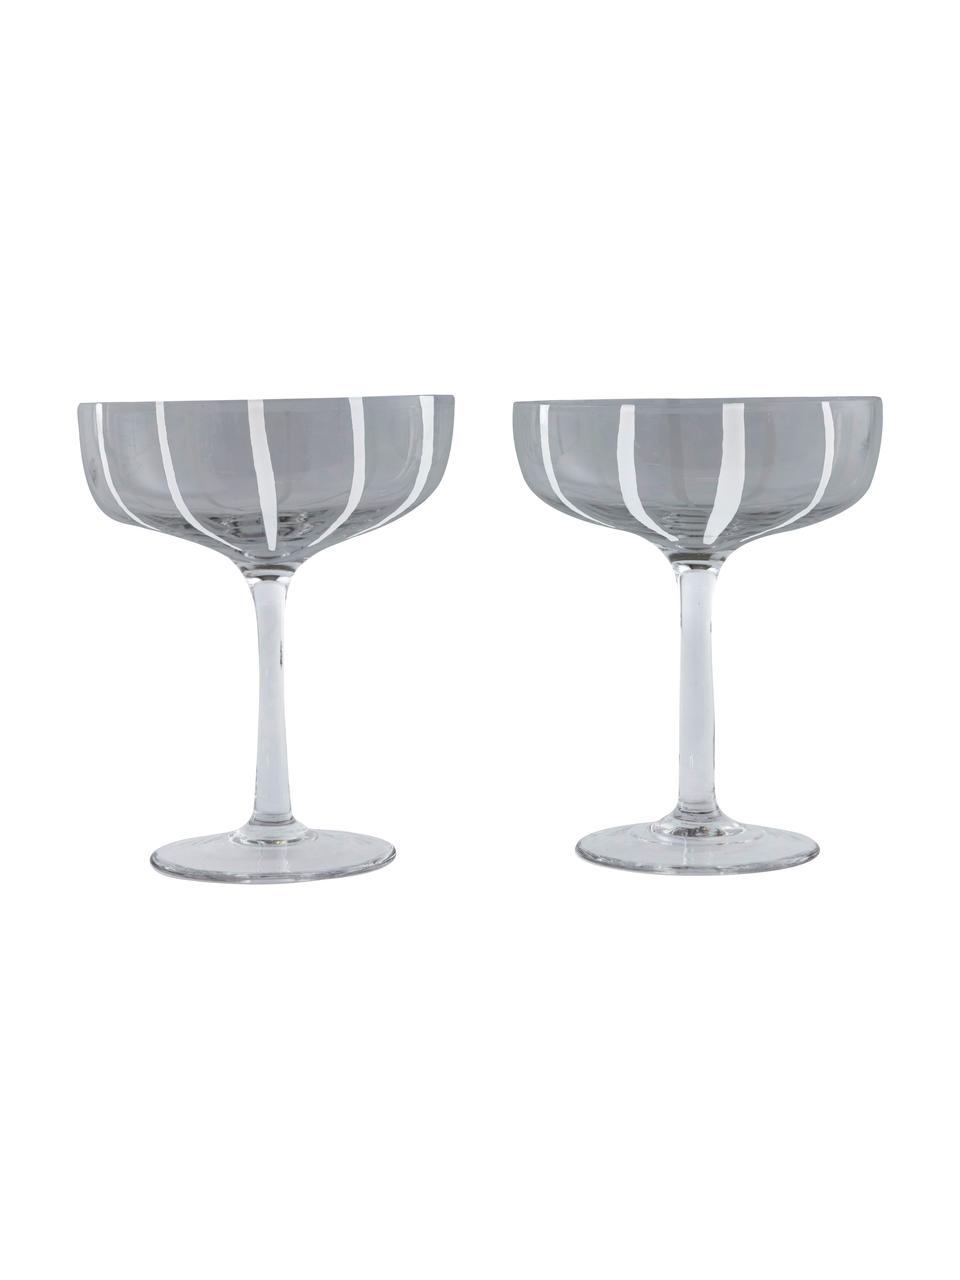 Coppa champagne in vetro soffiato Mizu, 2 pz, Vetro, Grigio, bianco, Ø 11 x Alt. 14 cm, 230 ml